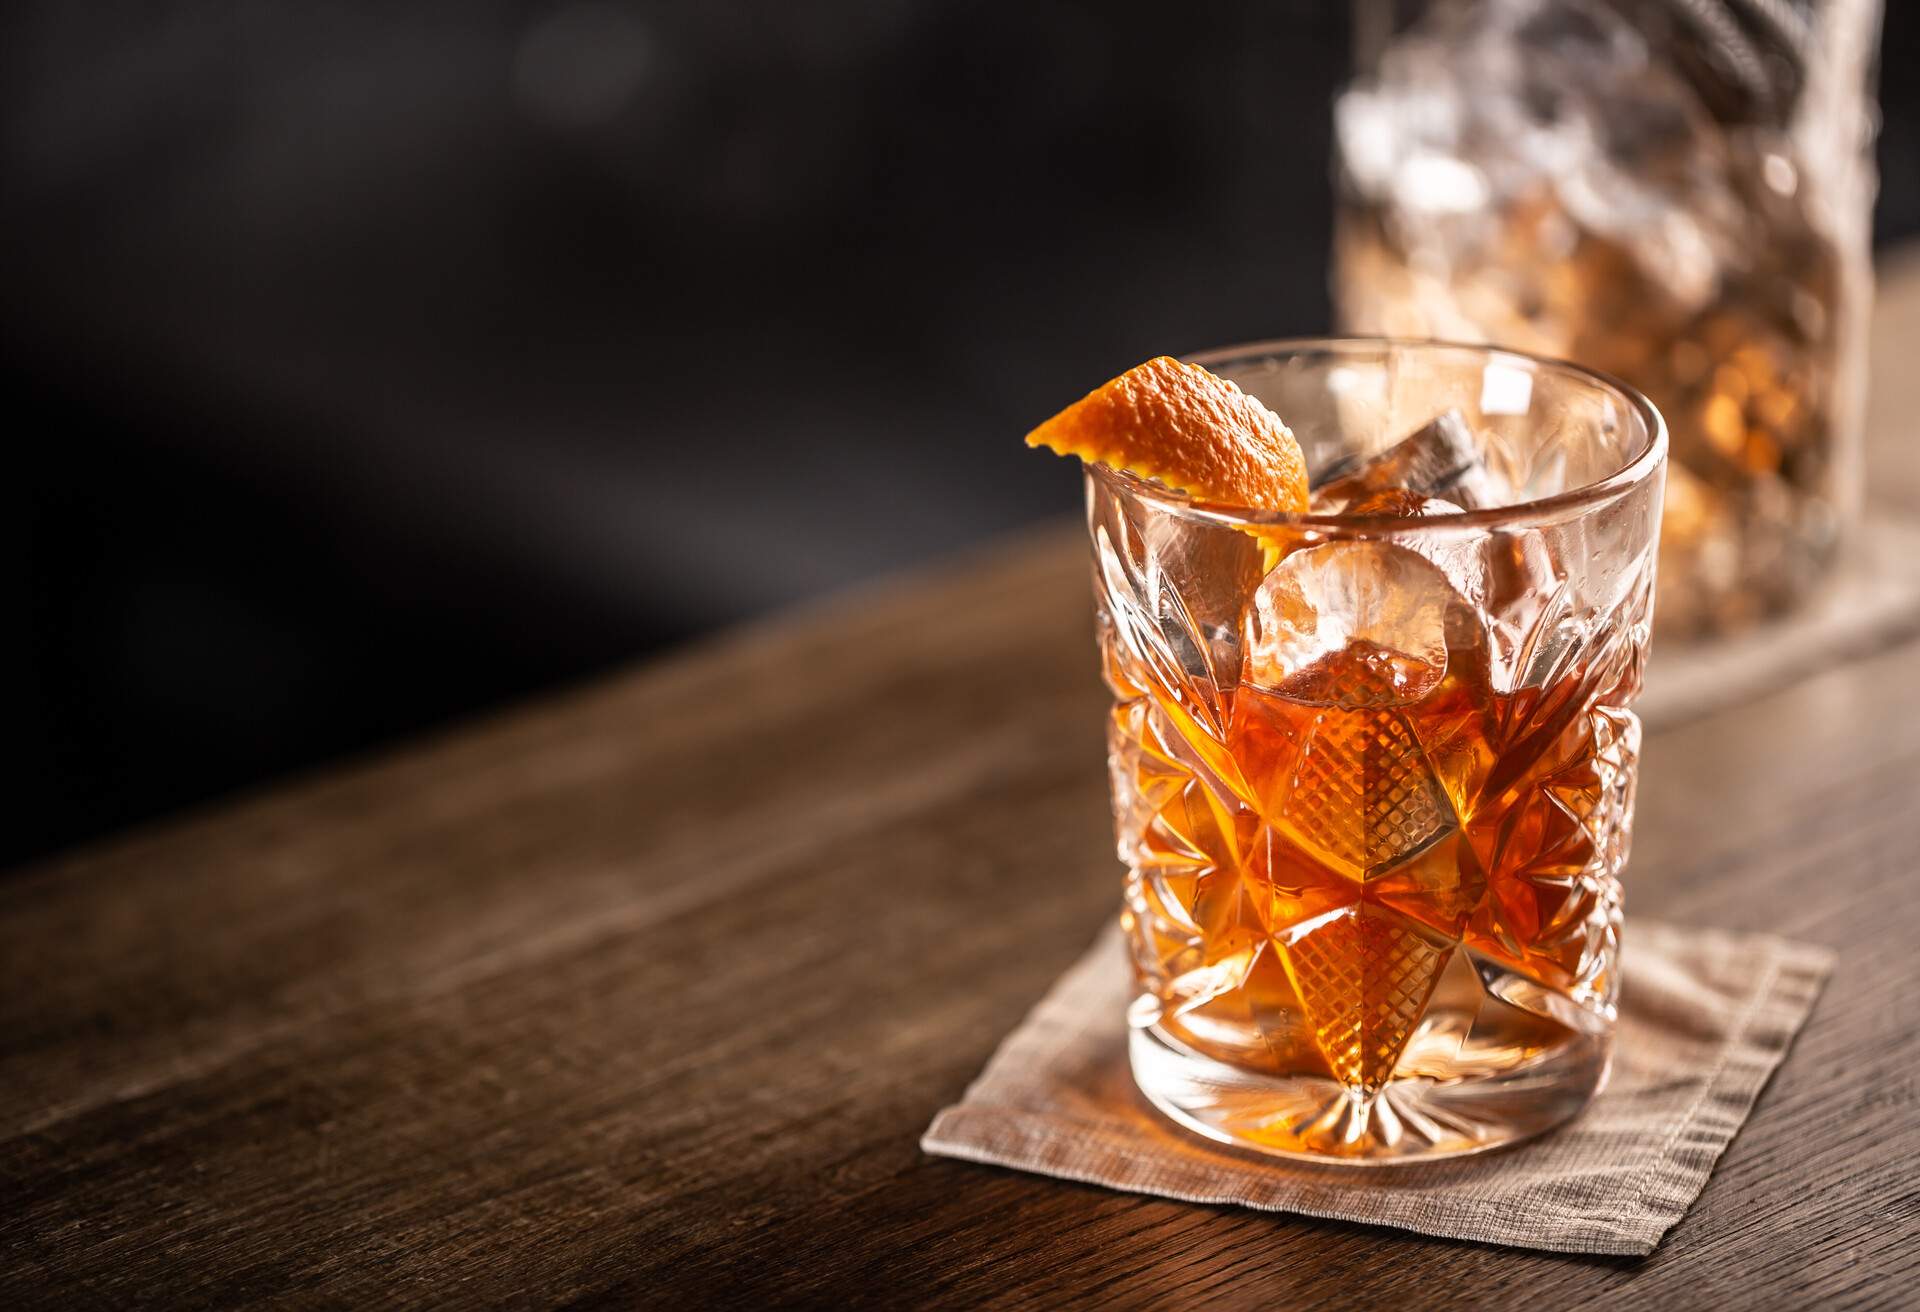 Old fashioned whiskey drink on ice with orange zest garnish.